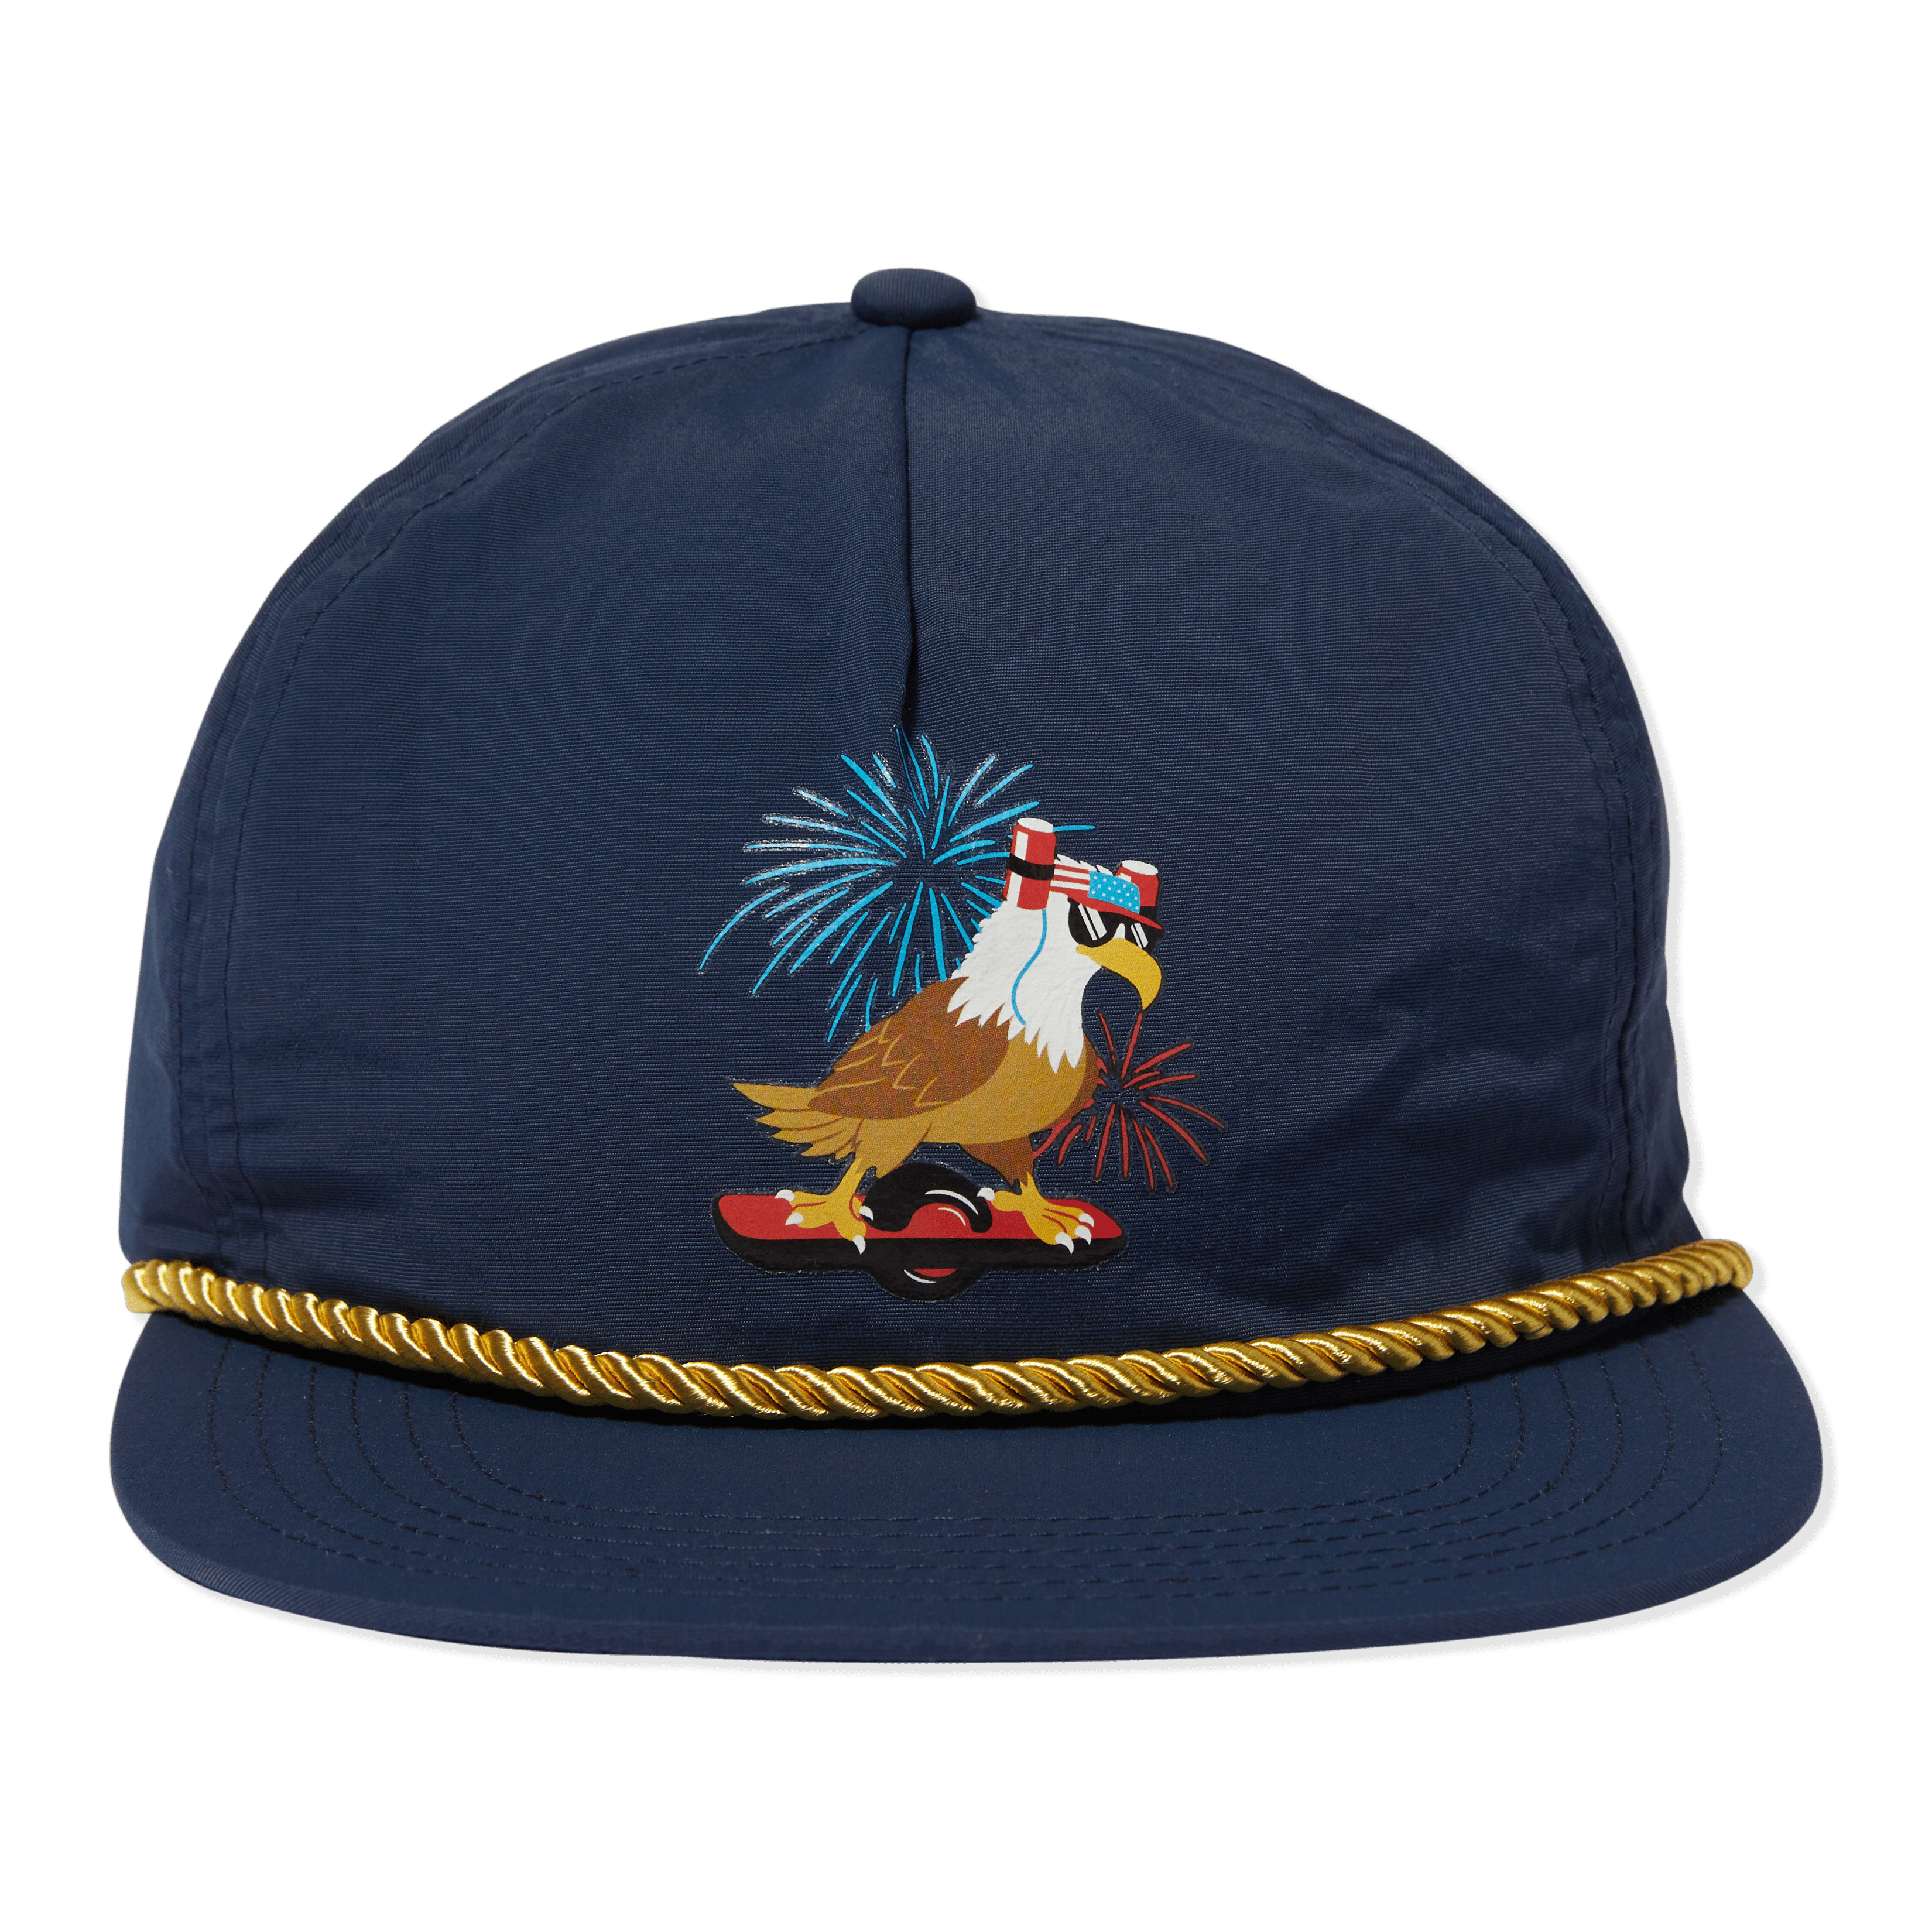 SHRED EAGLE NYLON HAT - NAVY HATS PARTY PANTS 